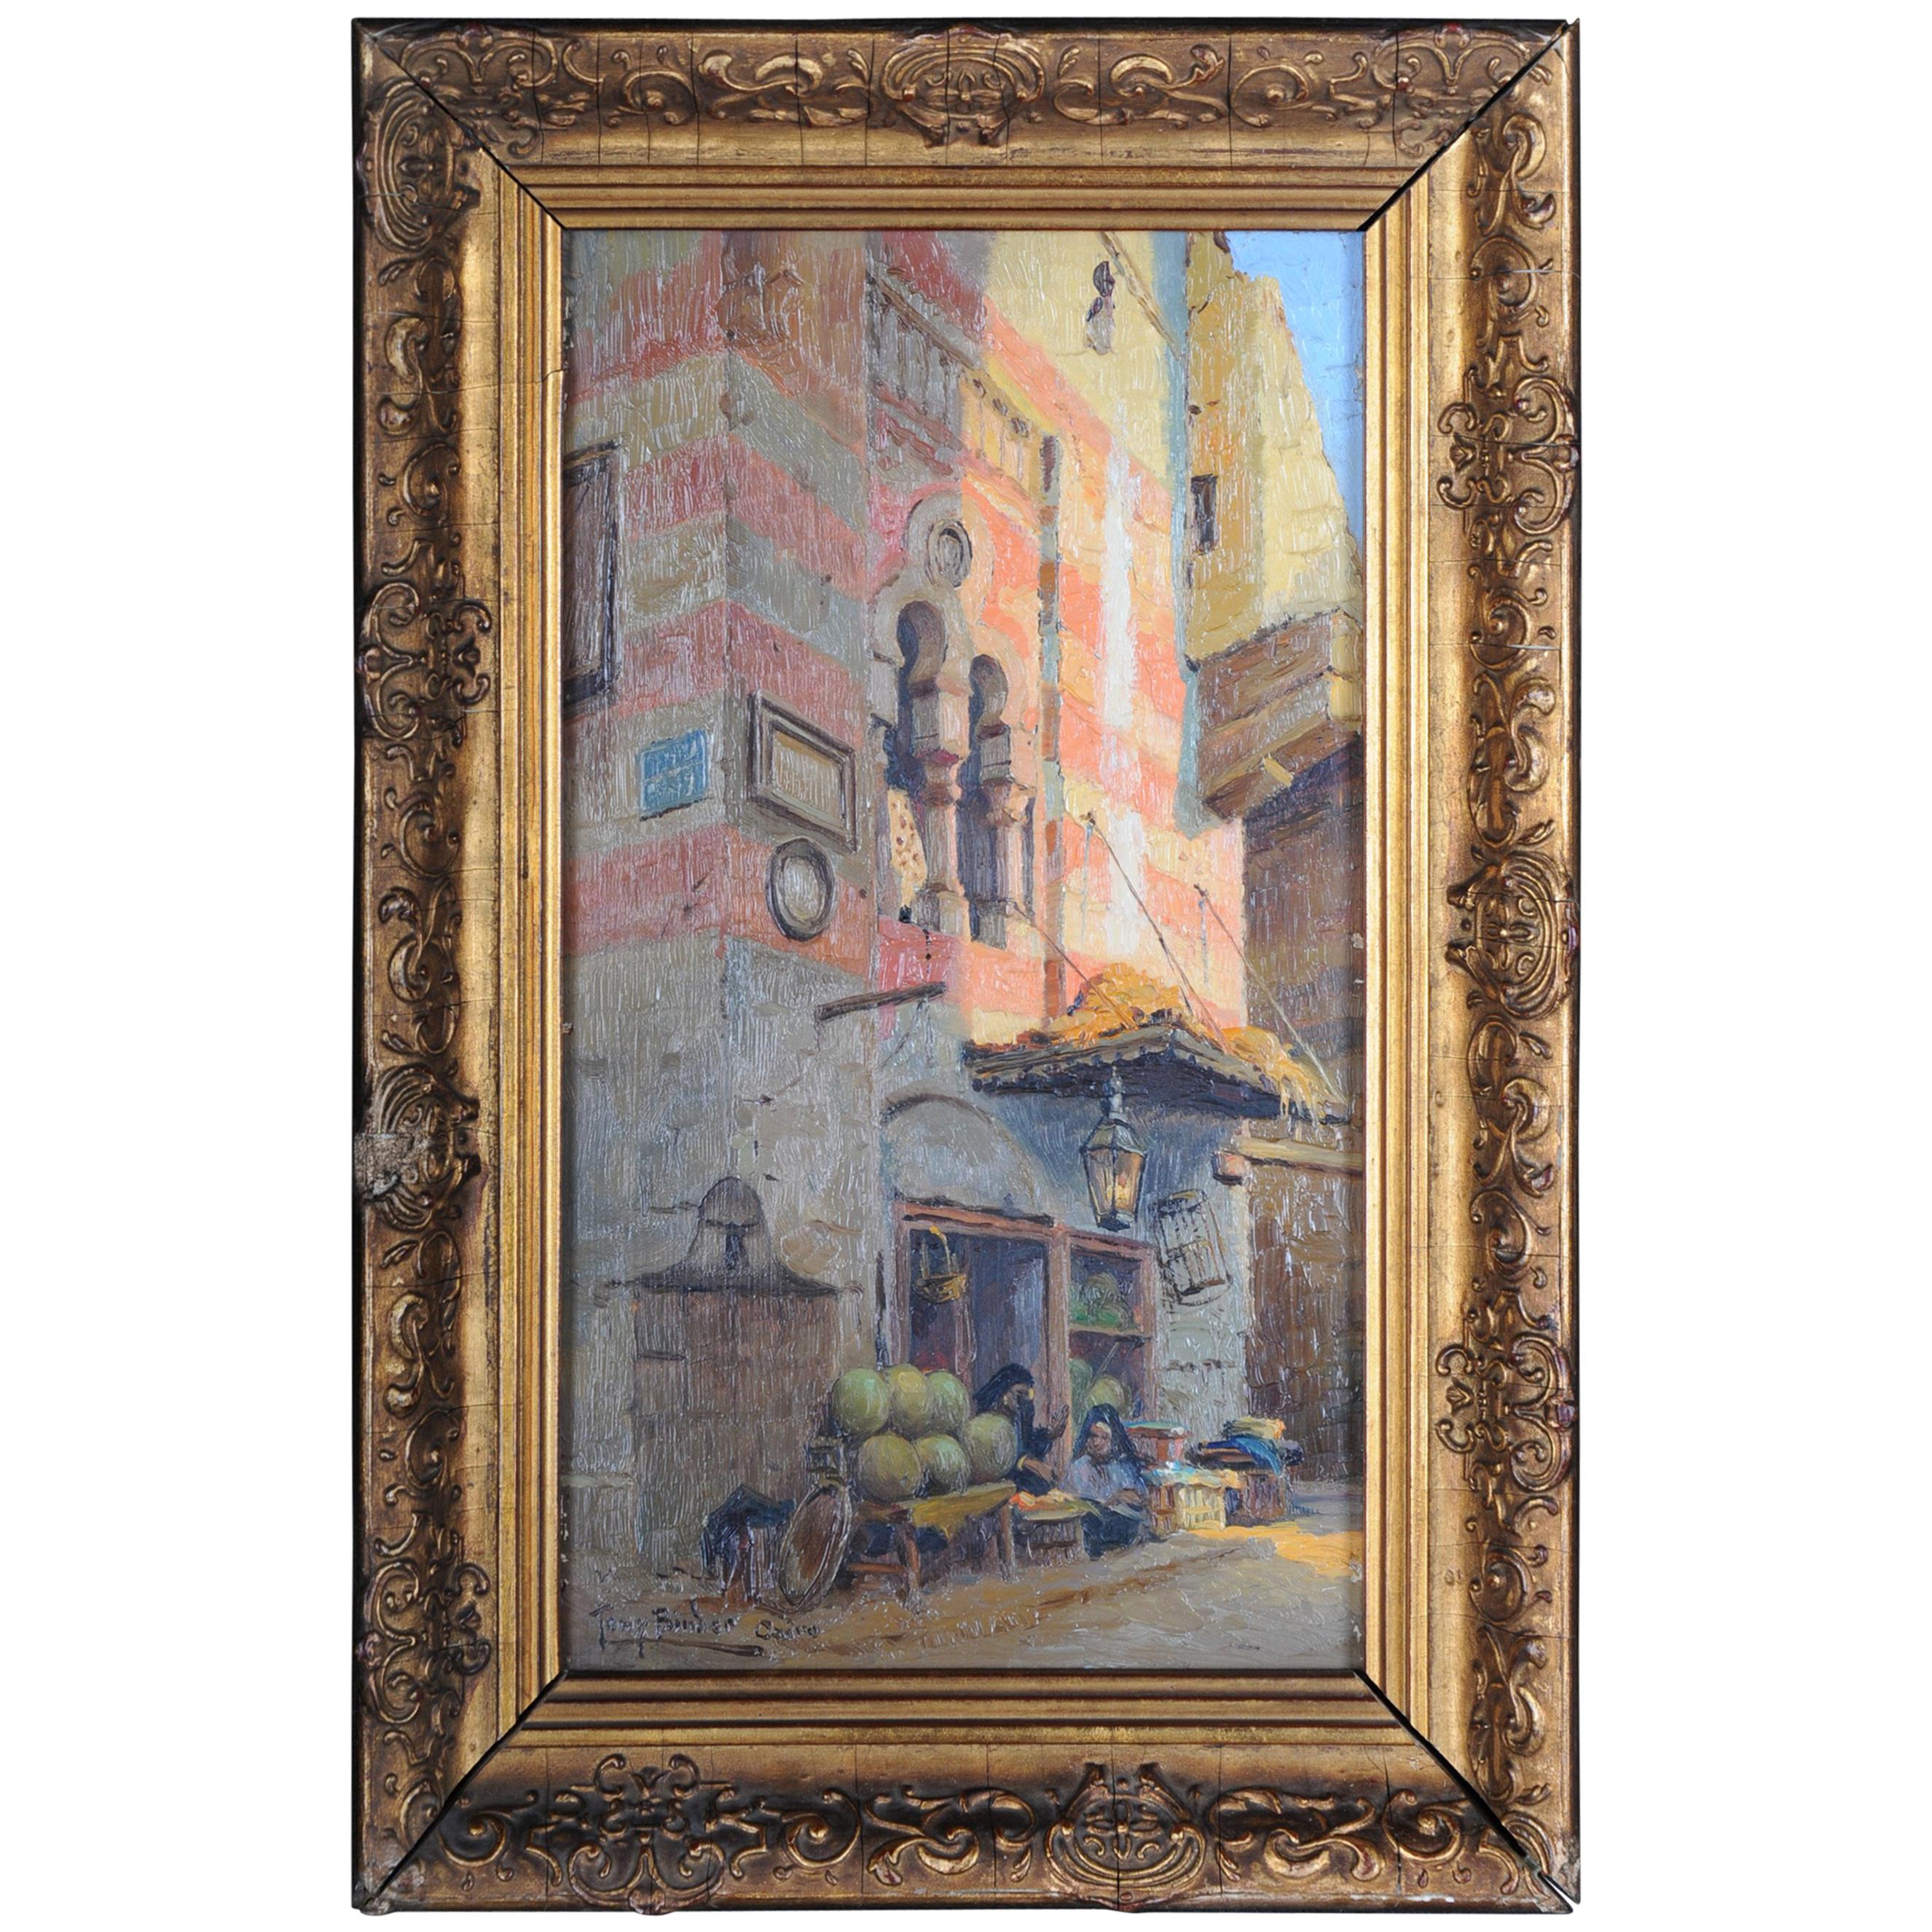 20th Century Oil Painting Signed, Tony Binder "Cairo", circa 1920